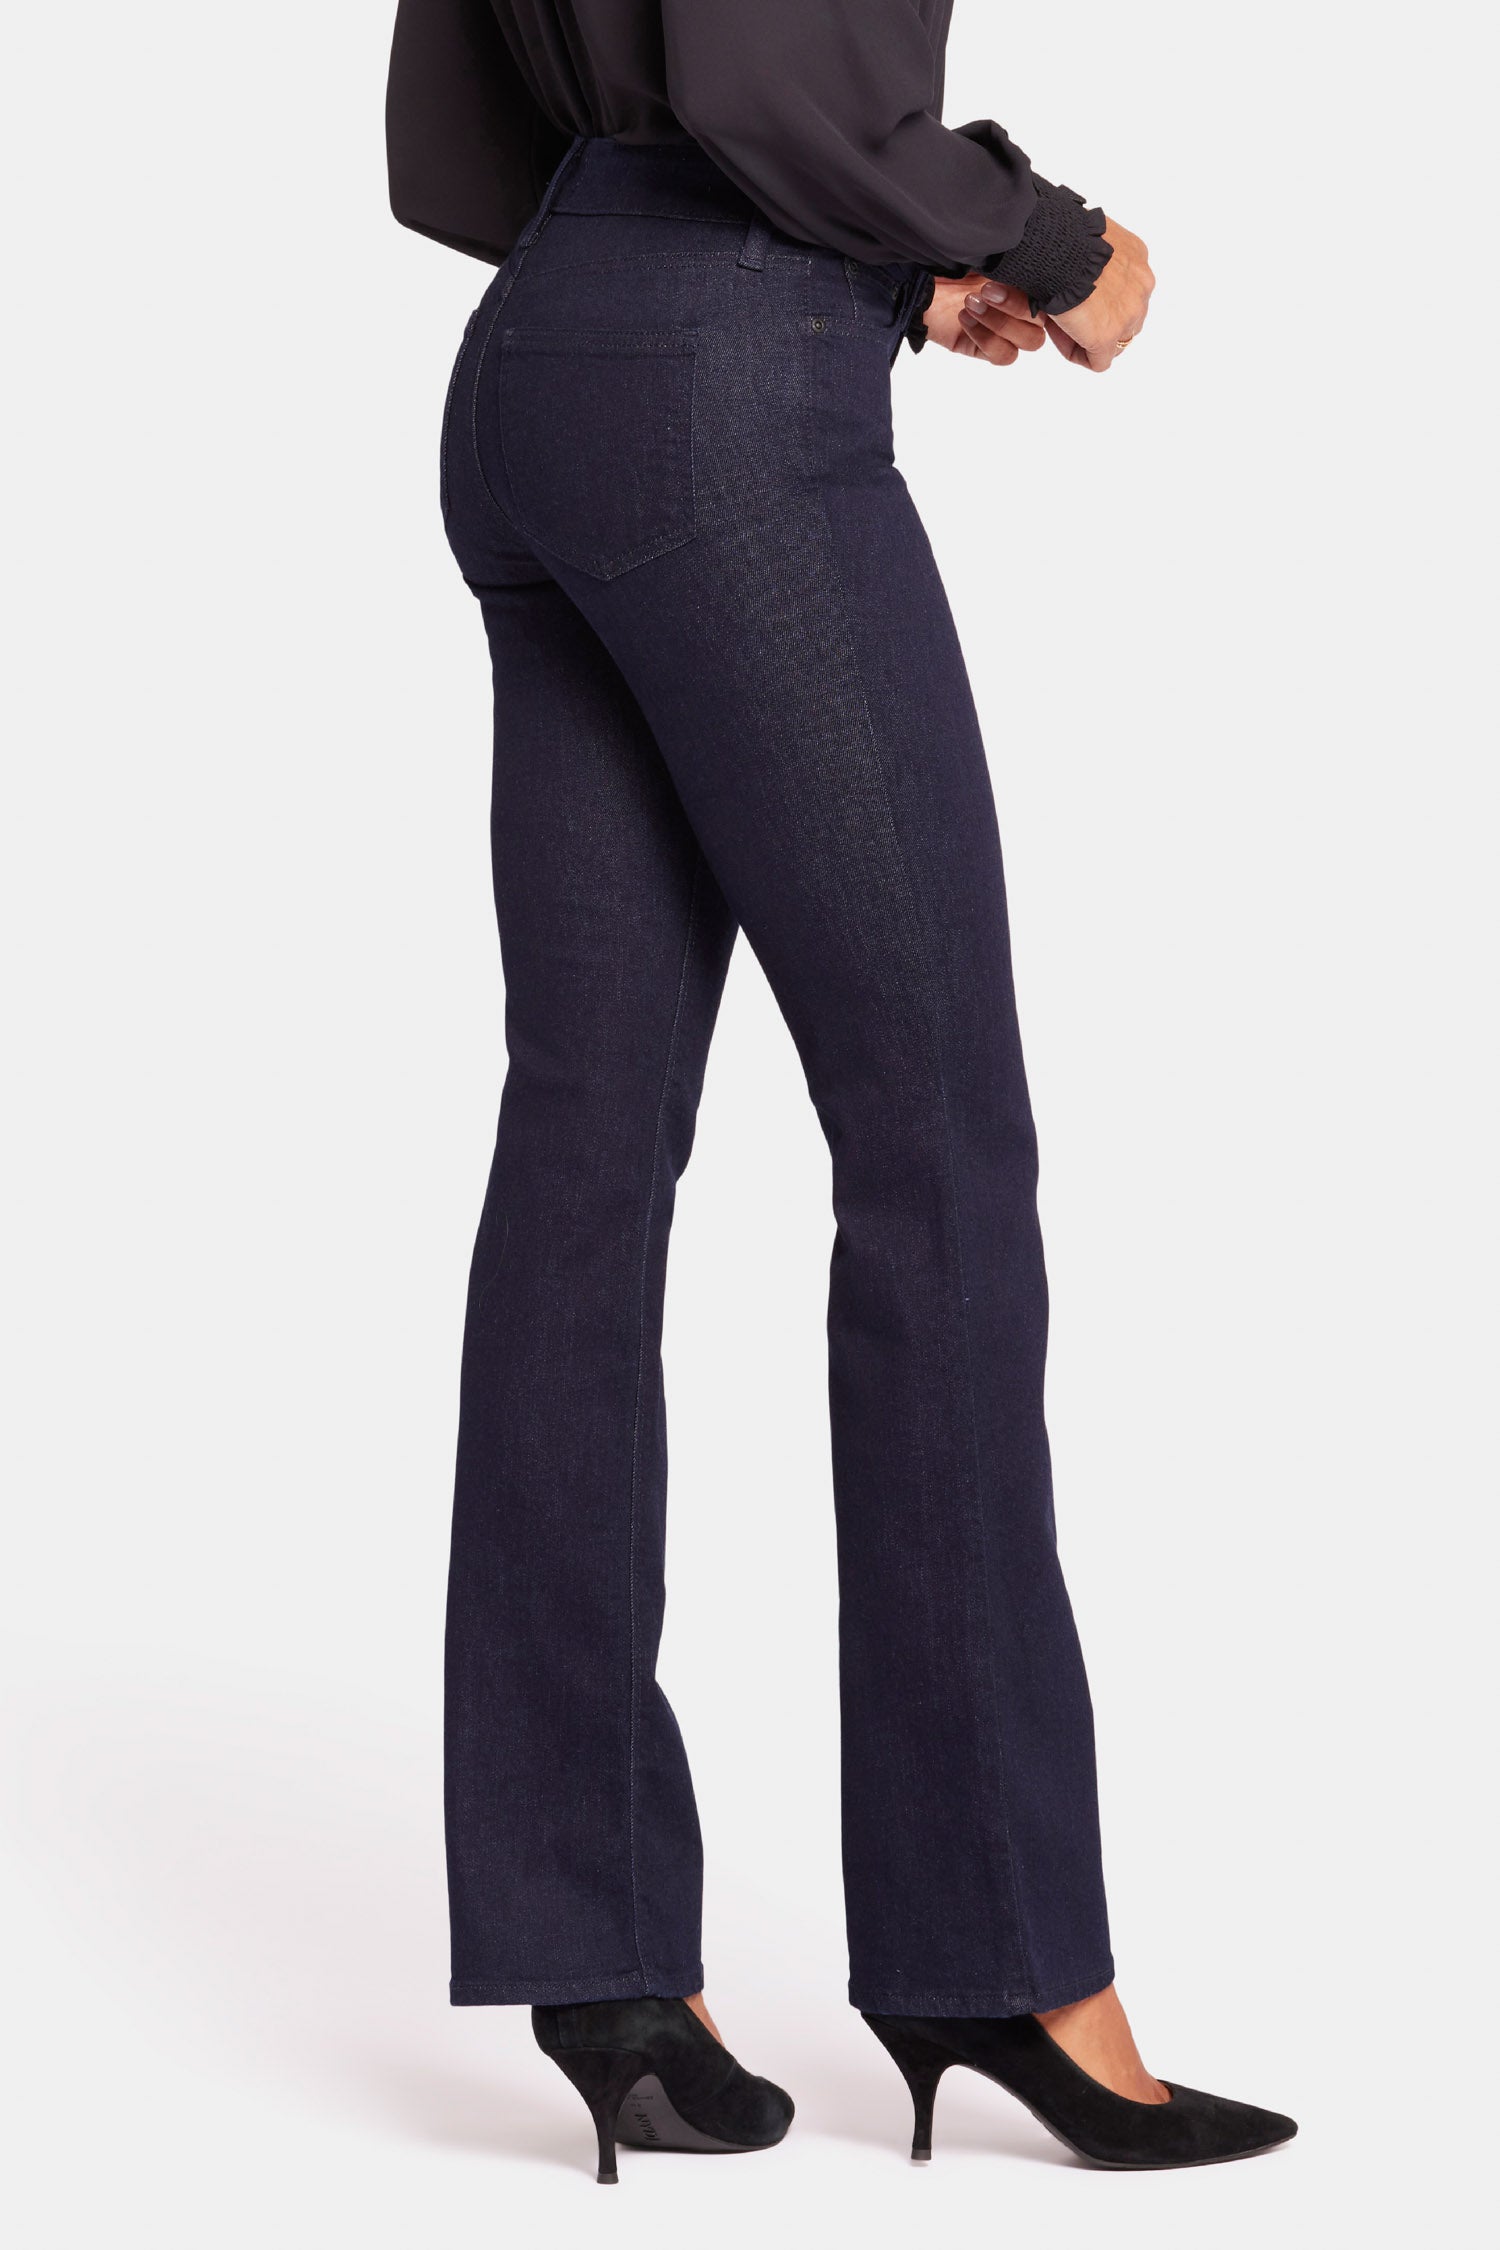 Barbara Bootcut Jeans In Petite - Rinse Blue | NYDJ